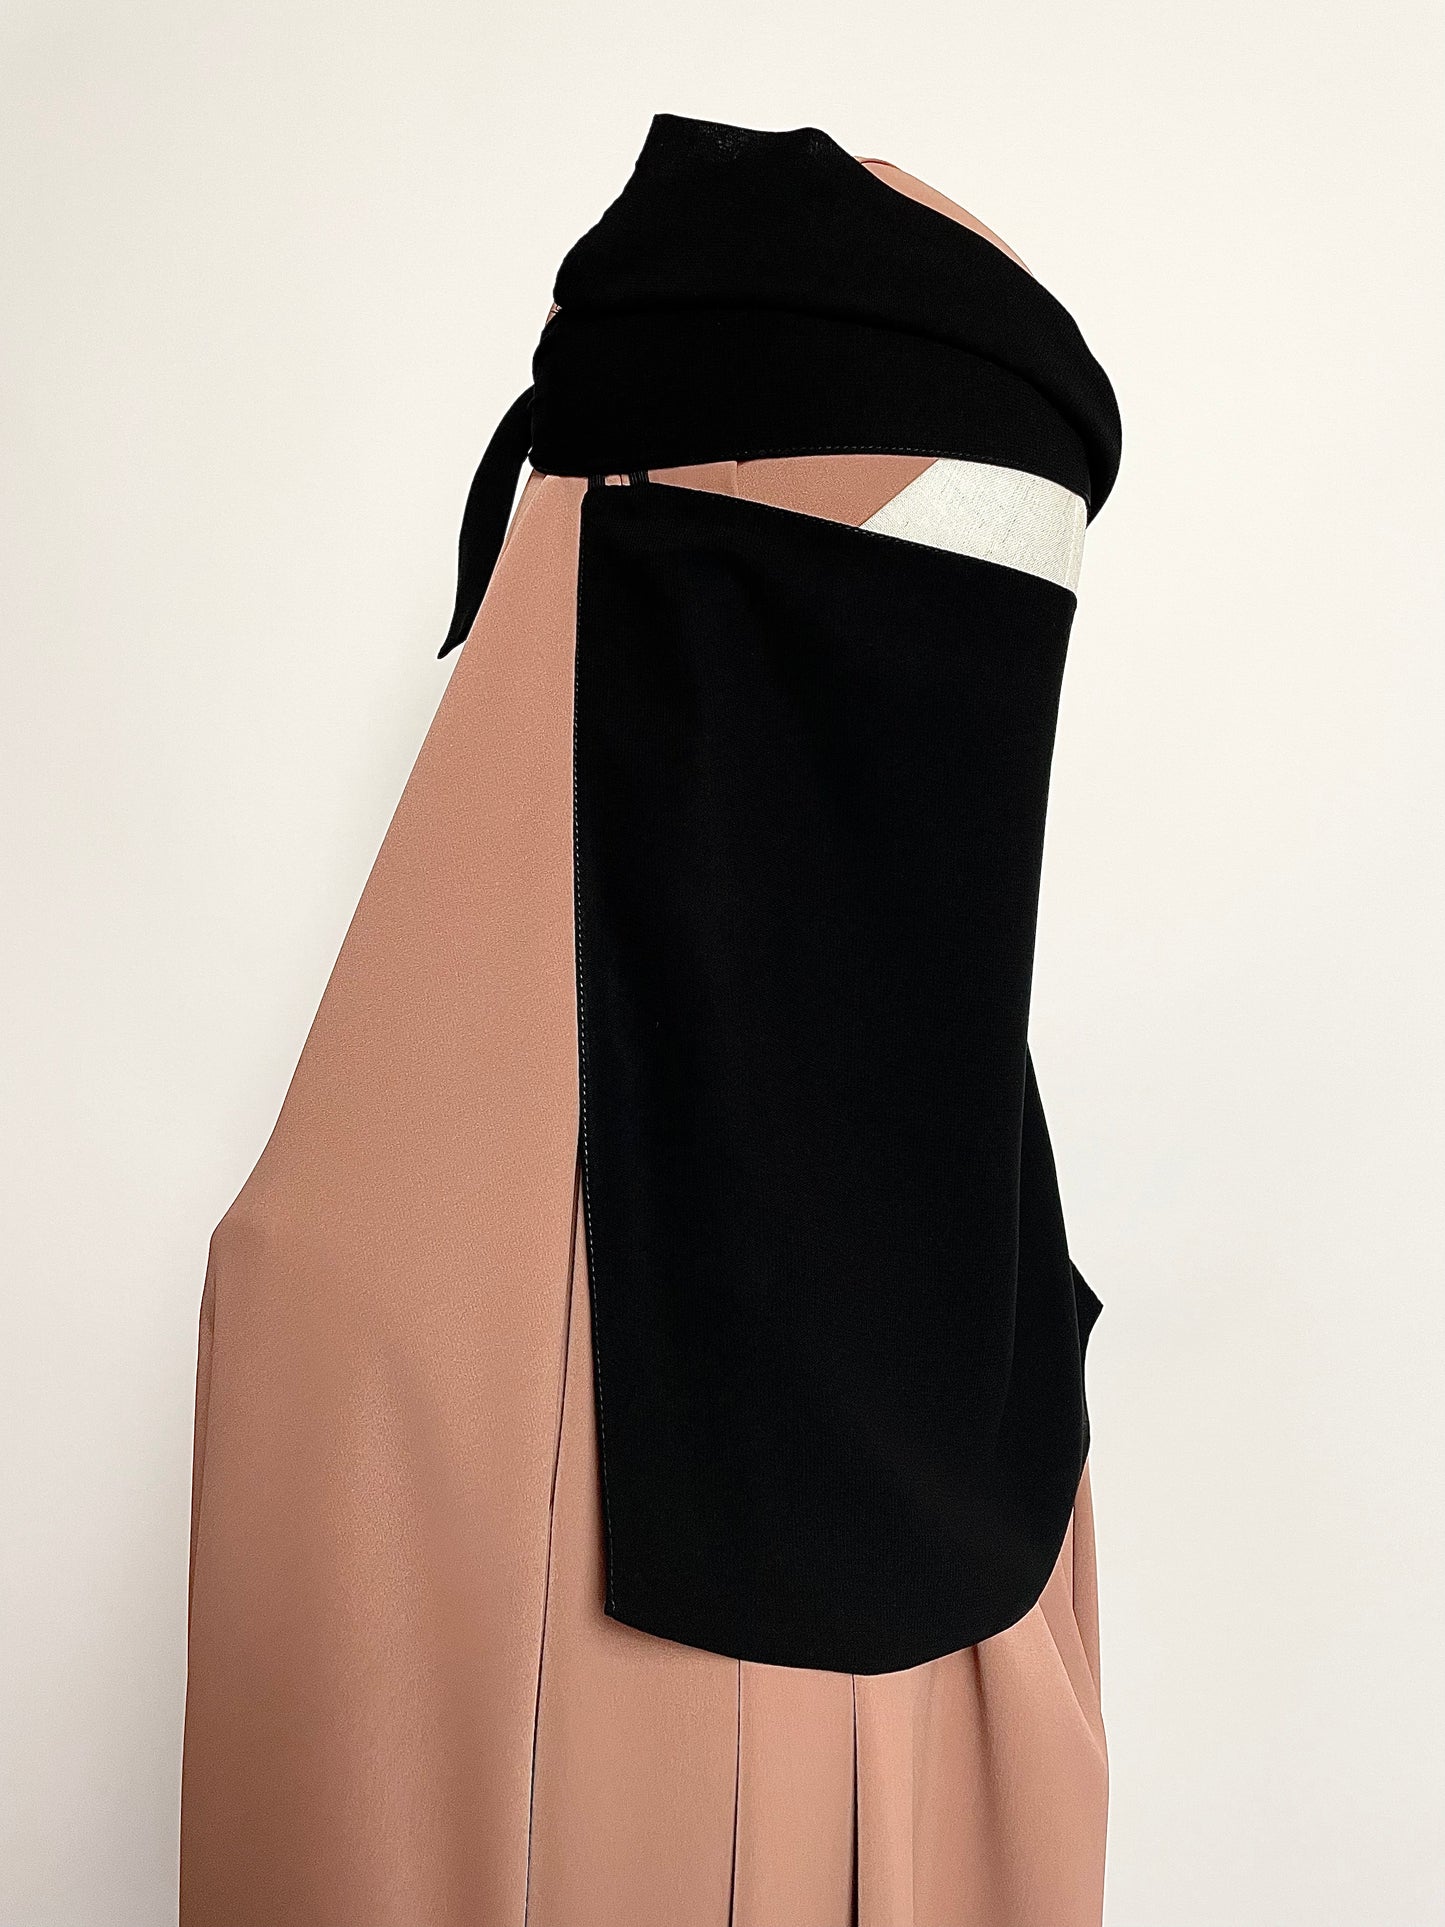 Flap Pull-down One Layer Niqab - Black